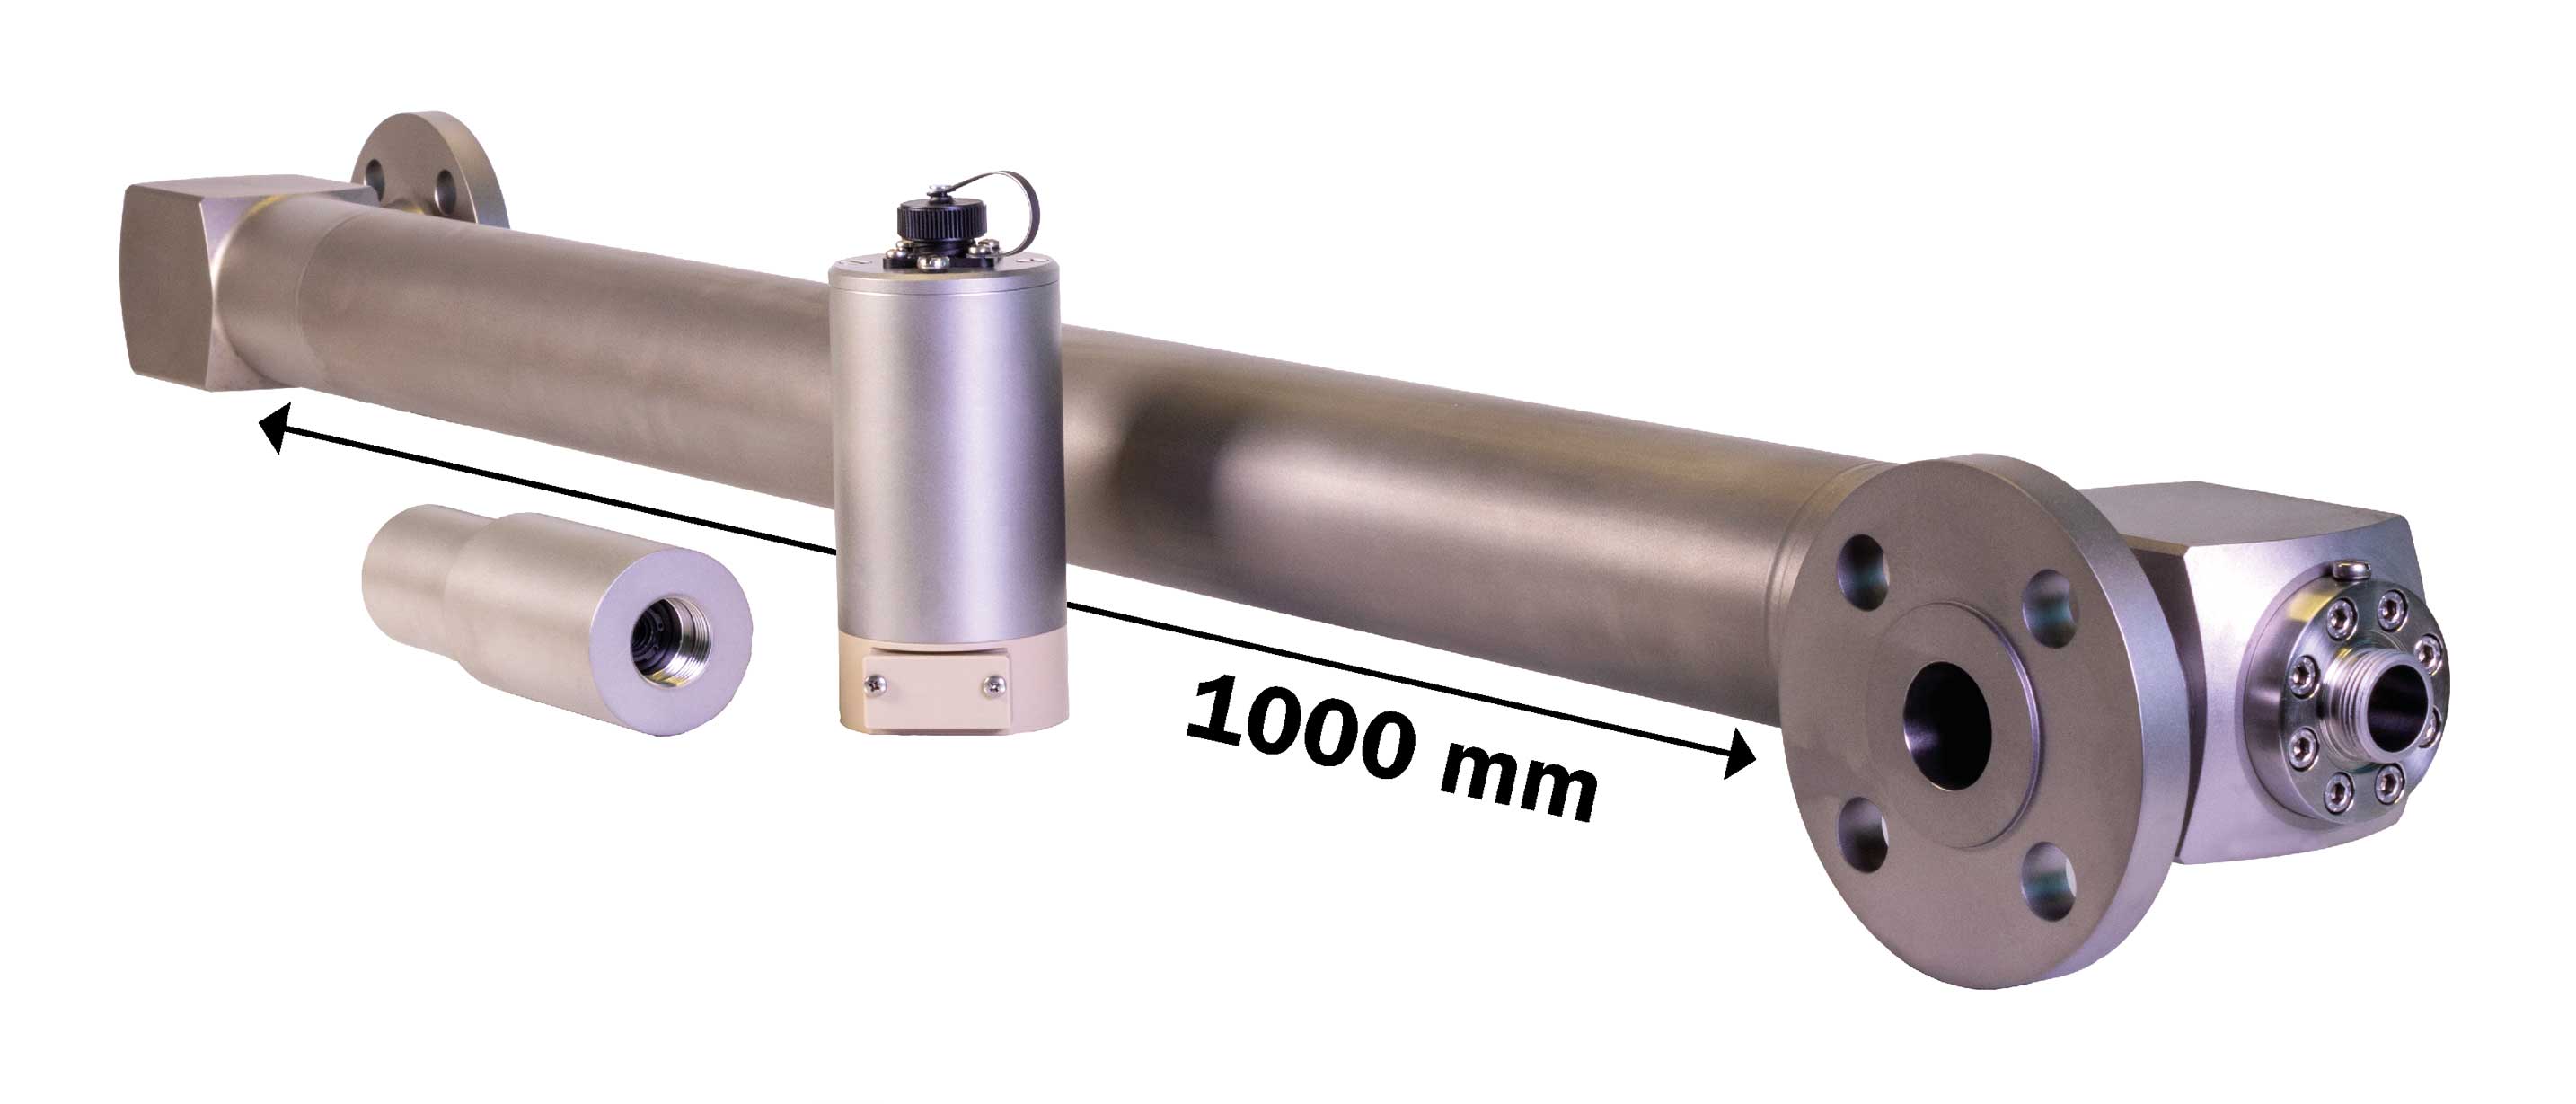 optek sensor body with 1000 mm optical path length